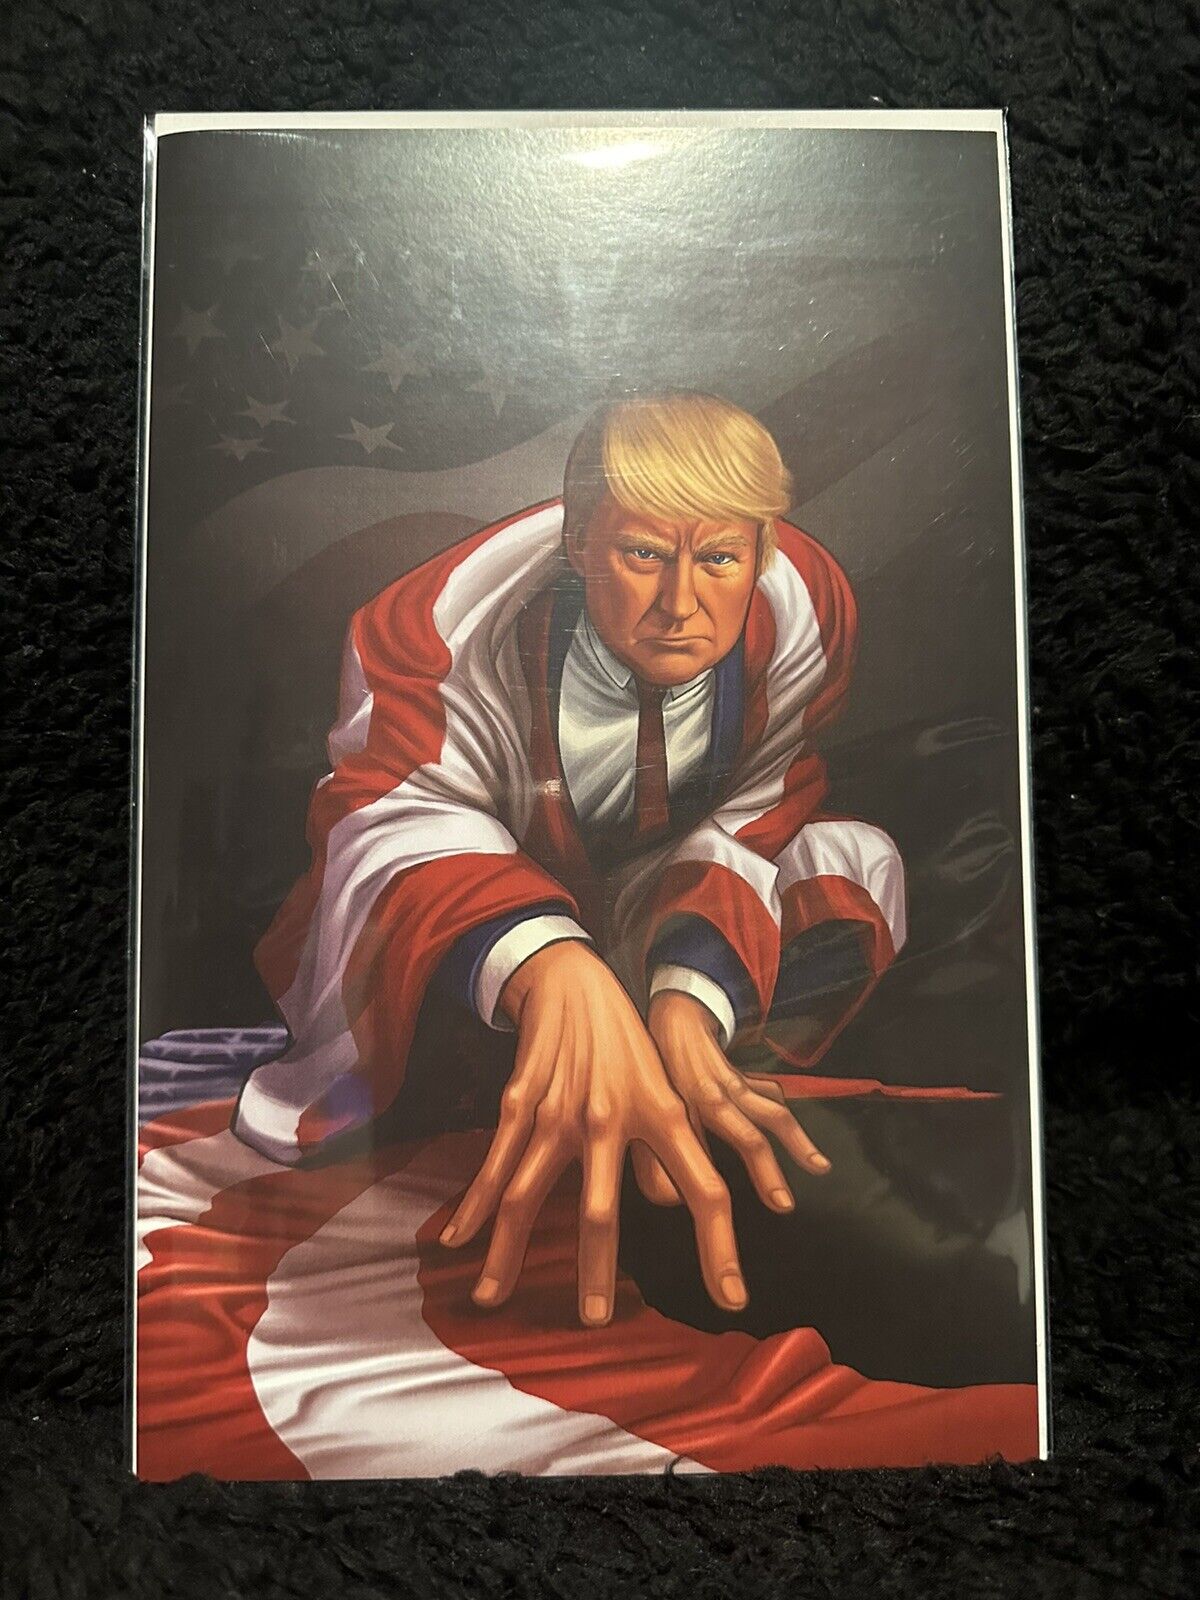 Cosplay Wars: Trump (Crain Homage) Ltd 100 With Numbered Coa